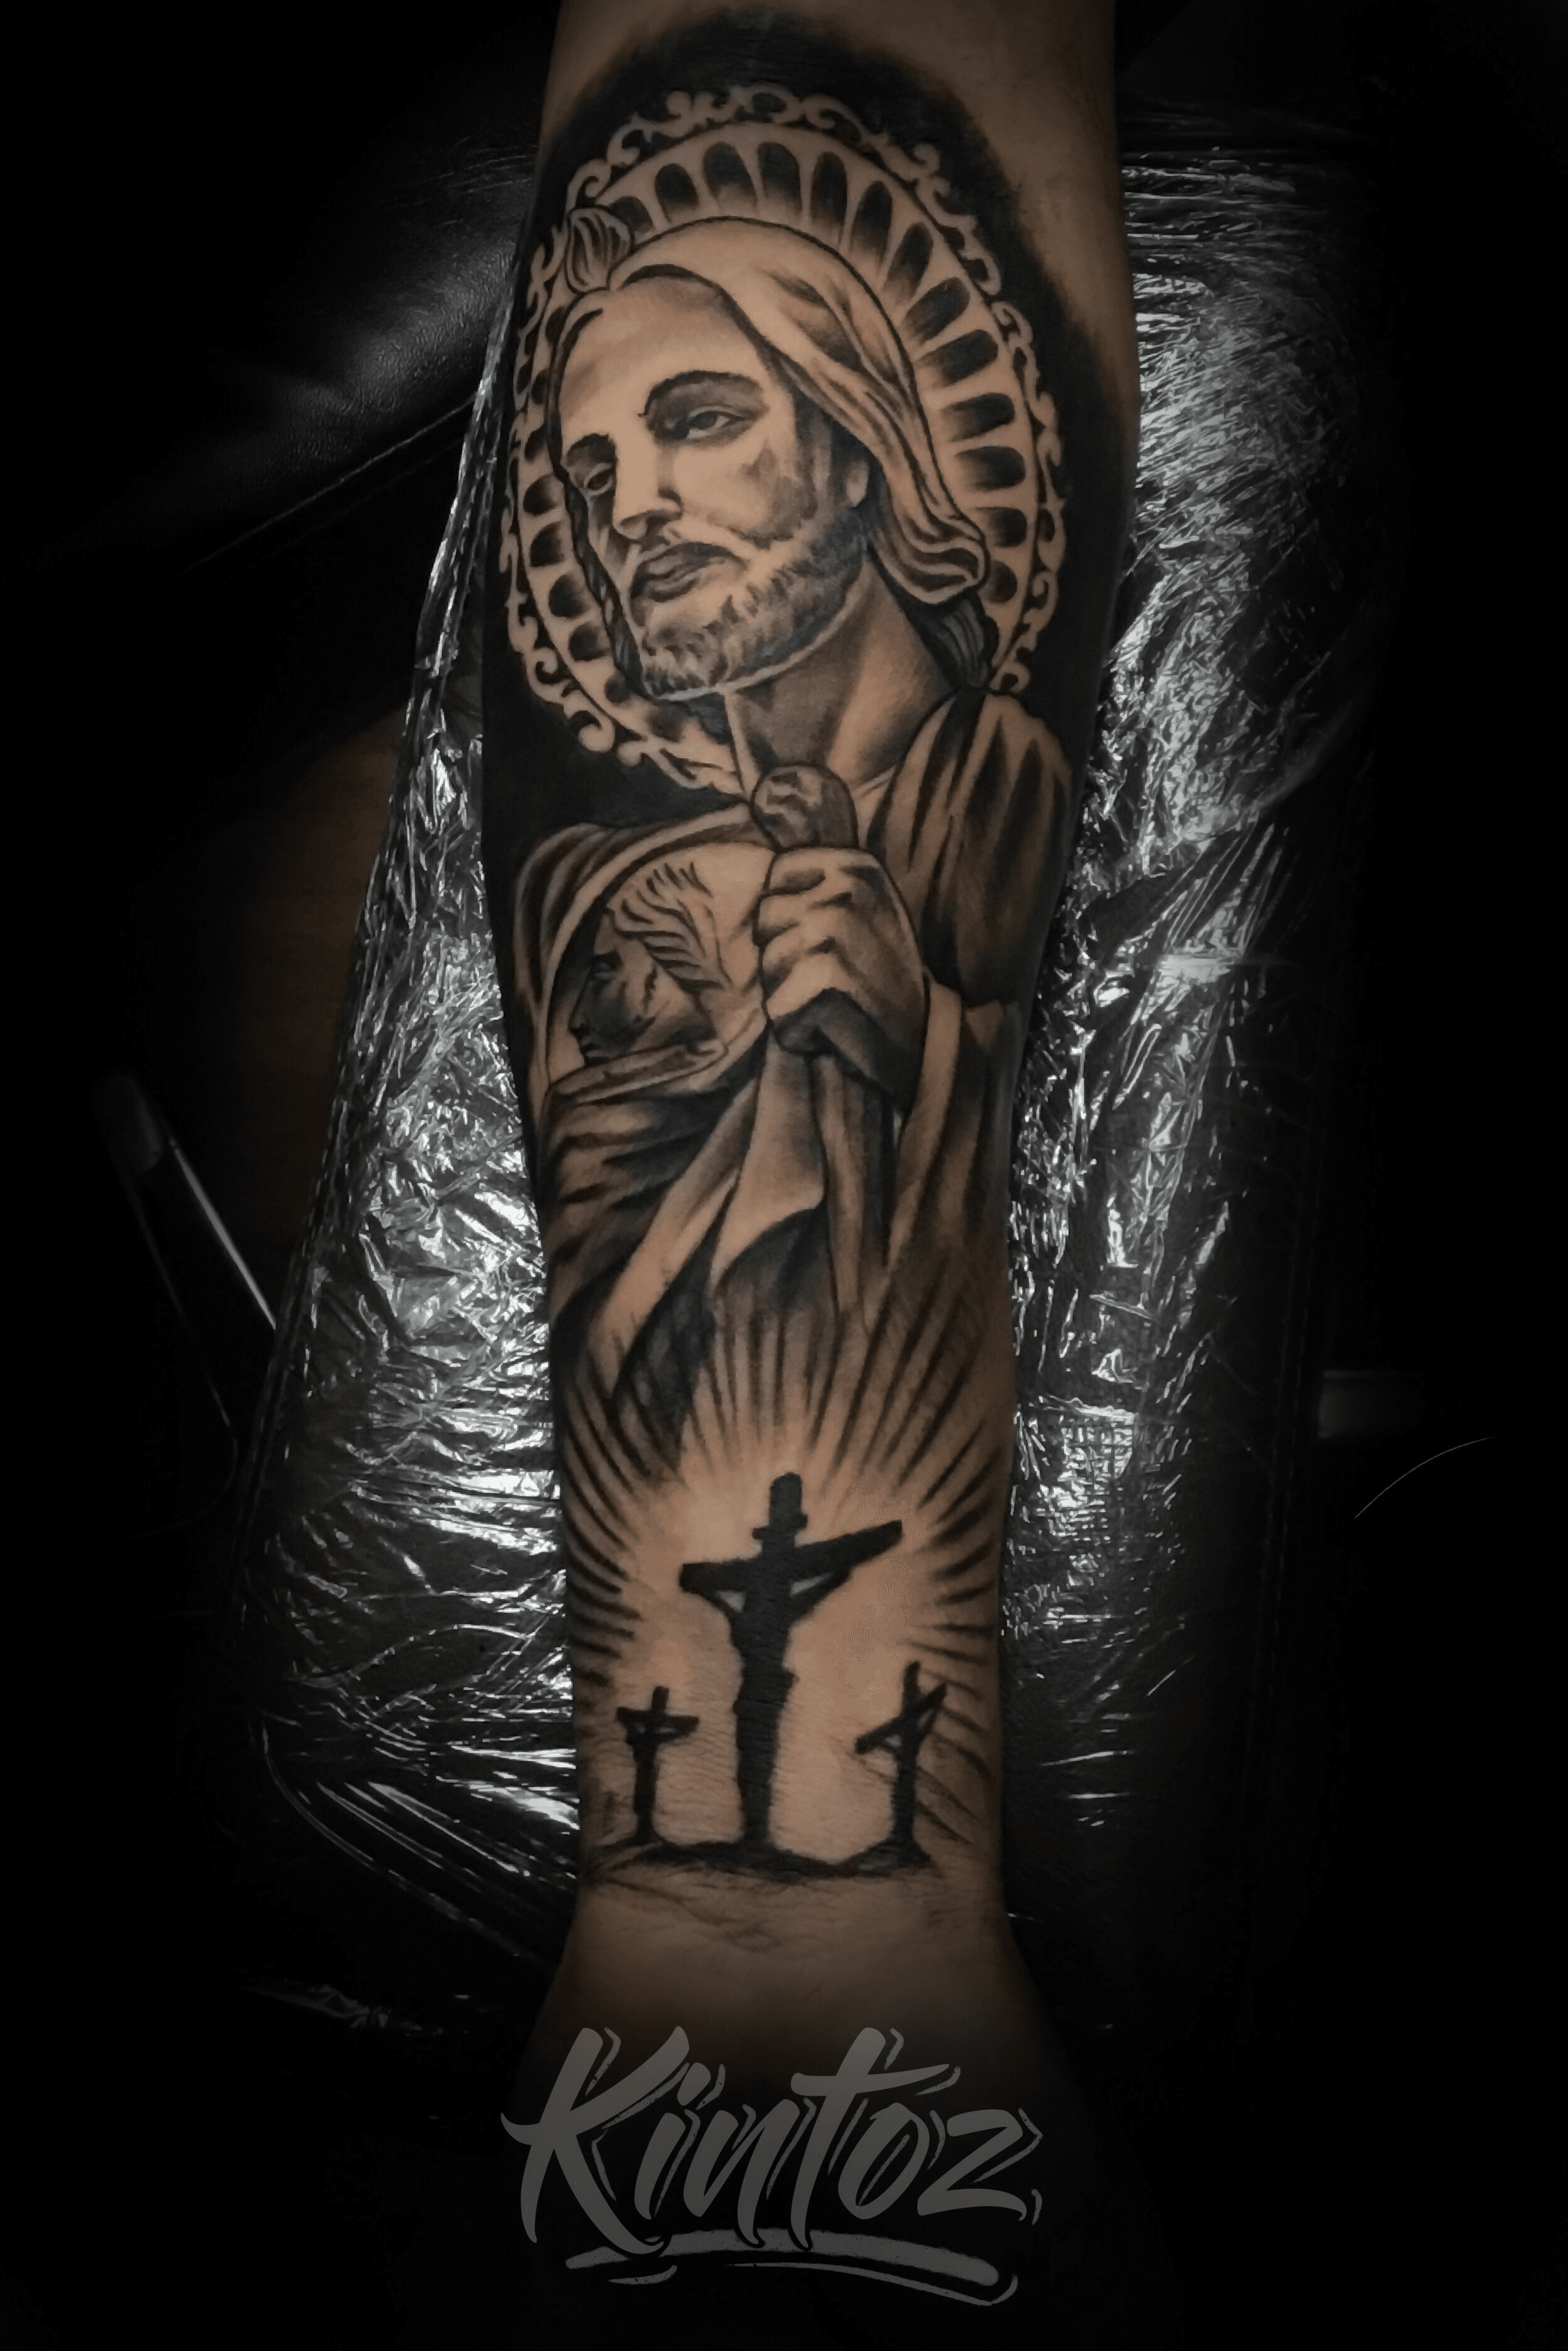 San Judas Tadeo Tattoo  Tattoo designs and meanings Tattoos Forearm  tattoos